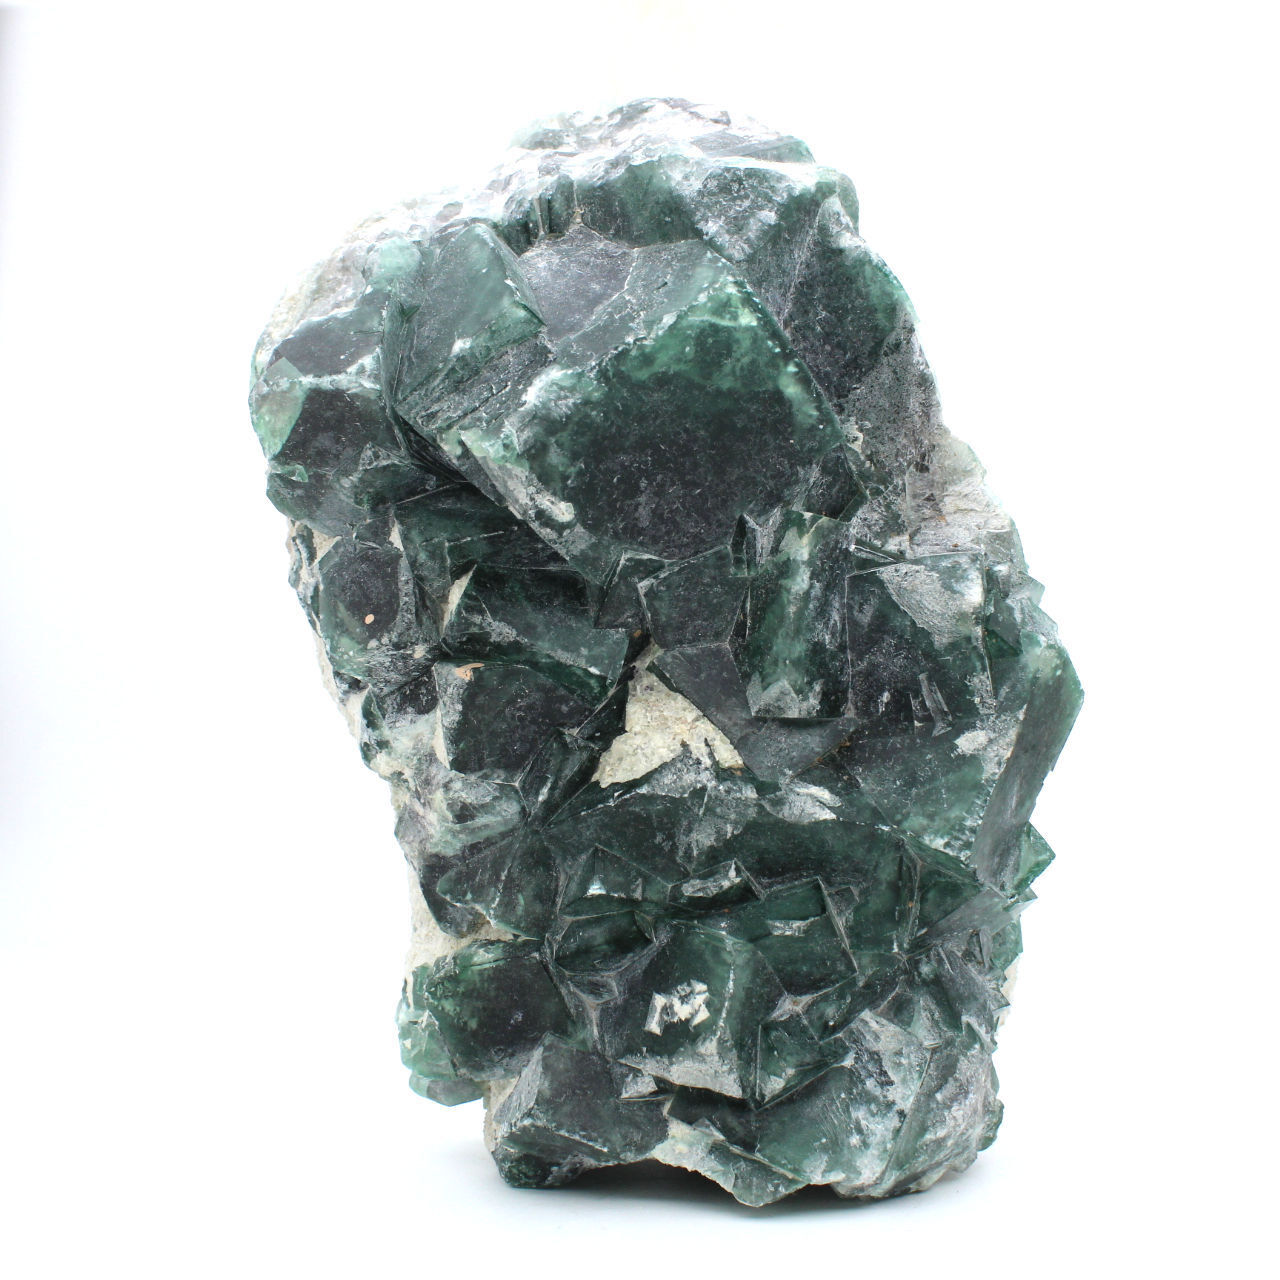 ▶️ Natural Green Crystallized Fluorite 4150gr 220mm Madagascar [Video